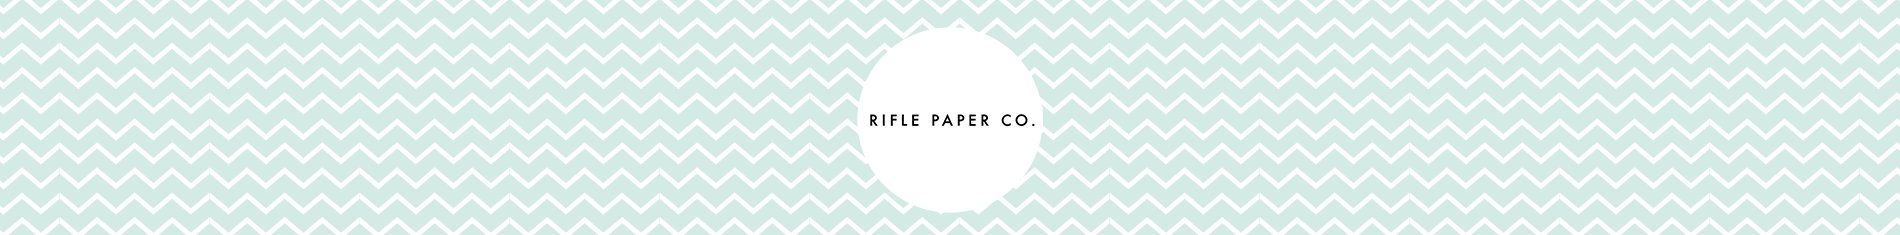 Rifle Paper Co. Birch Wrapping Sheet